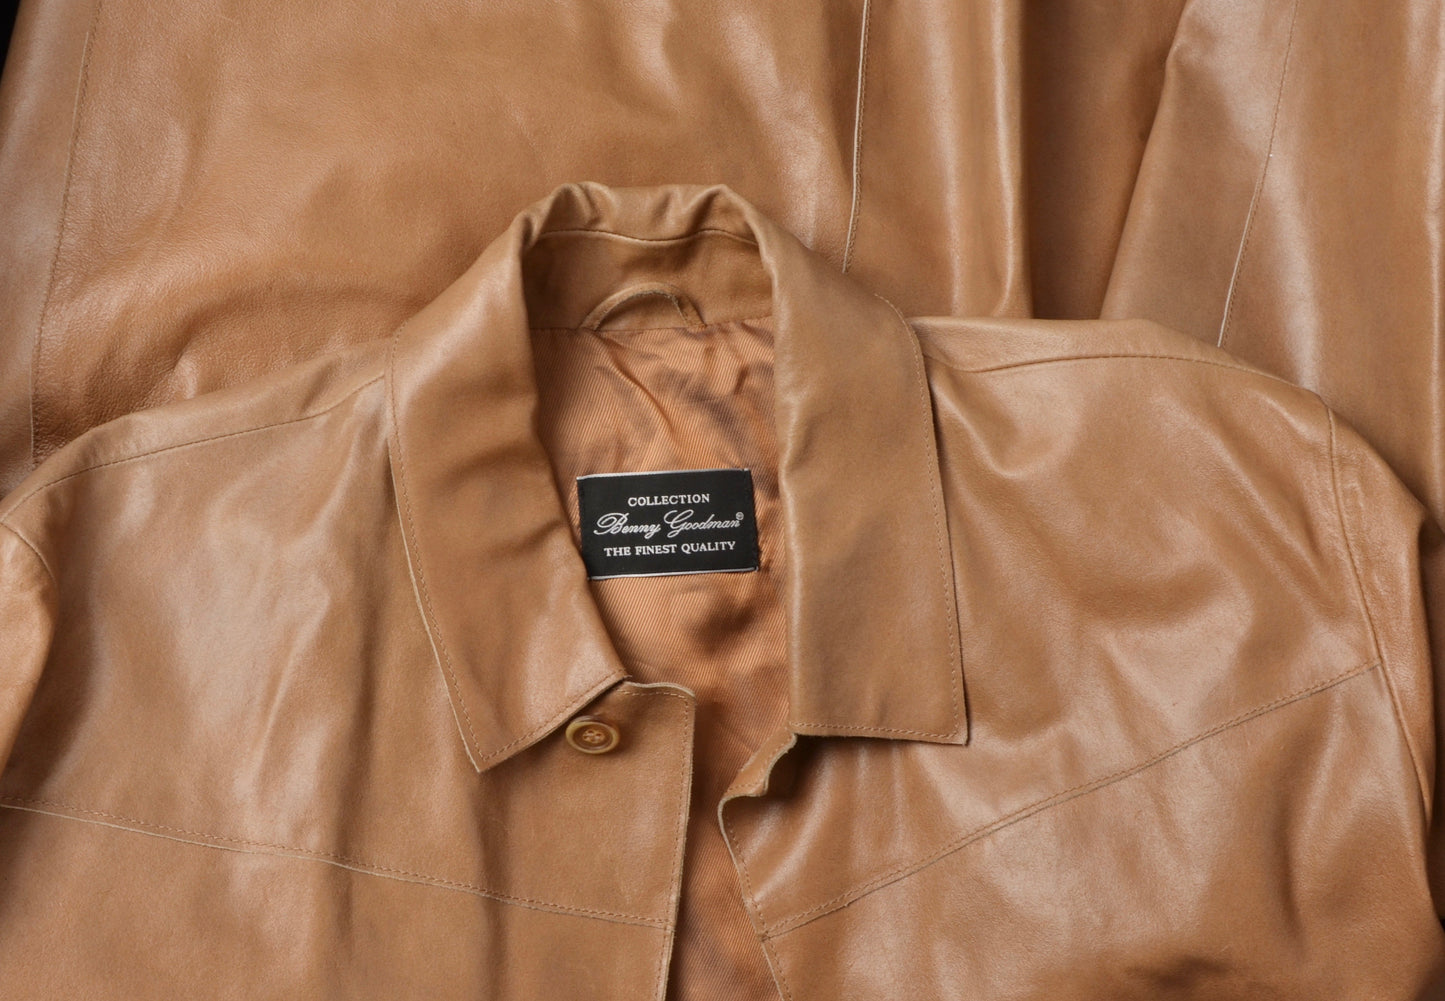 Benny Goodman Leather Jacket Size 52 - Tan